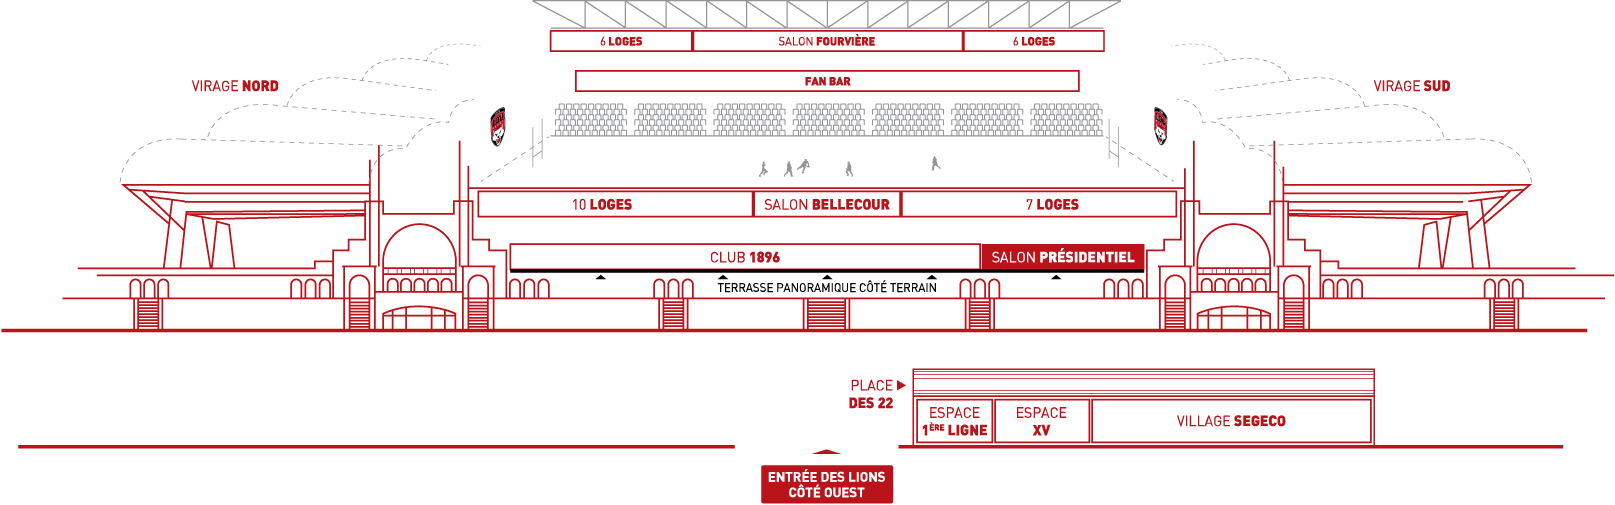 Espace salon présidentiel Matmut Stadium Lyon Gerland plan schématique 